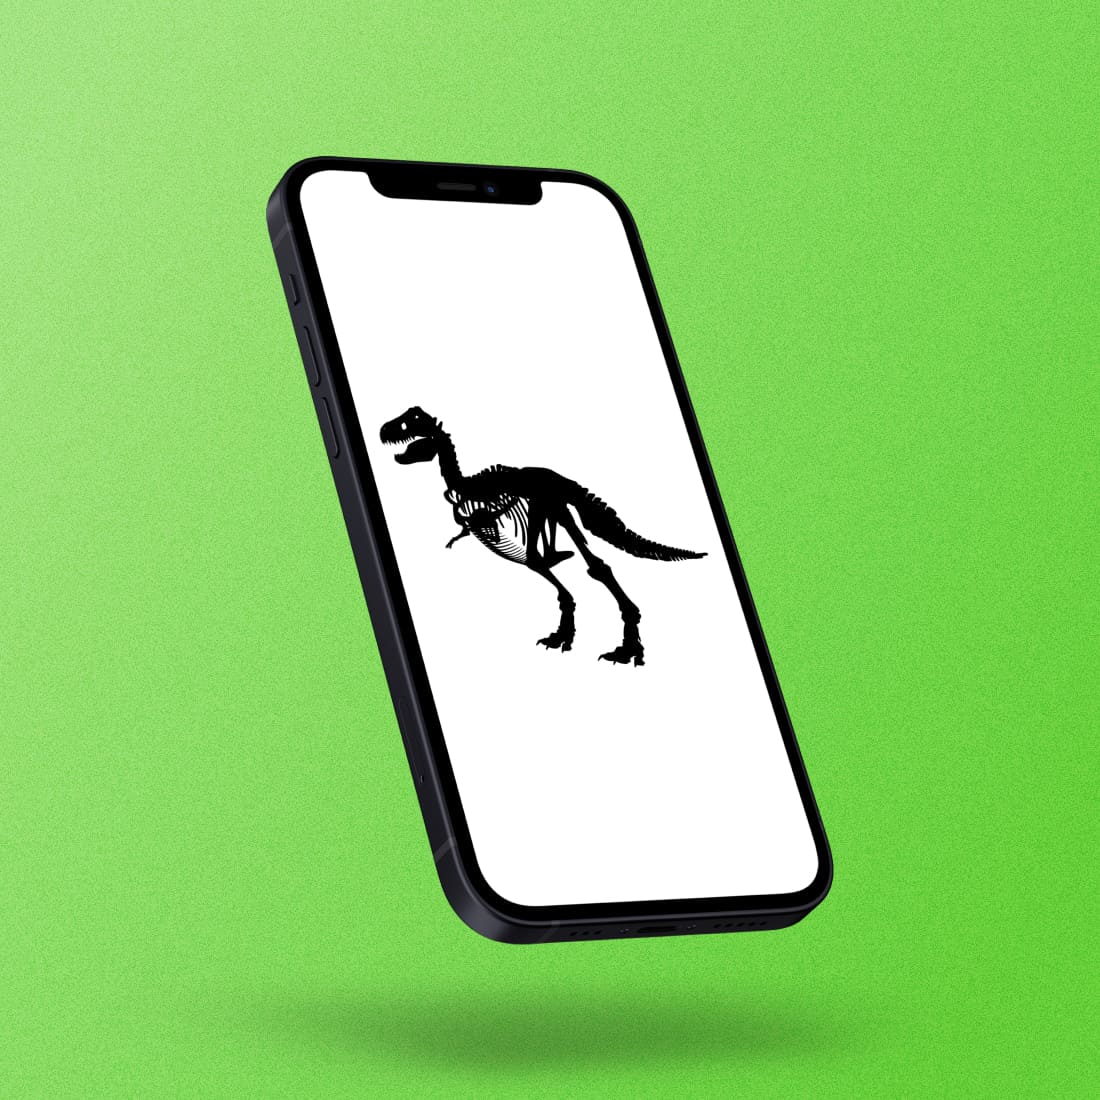 Dinosaur Skeleton on the Phone Lockscreen.